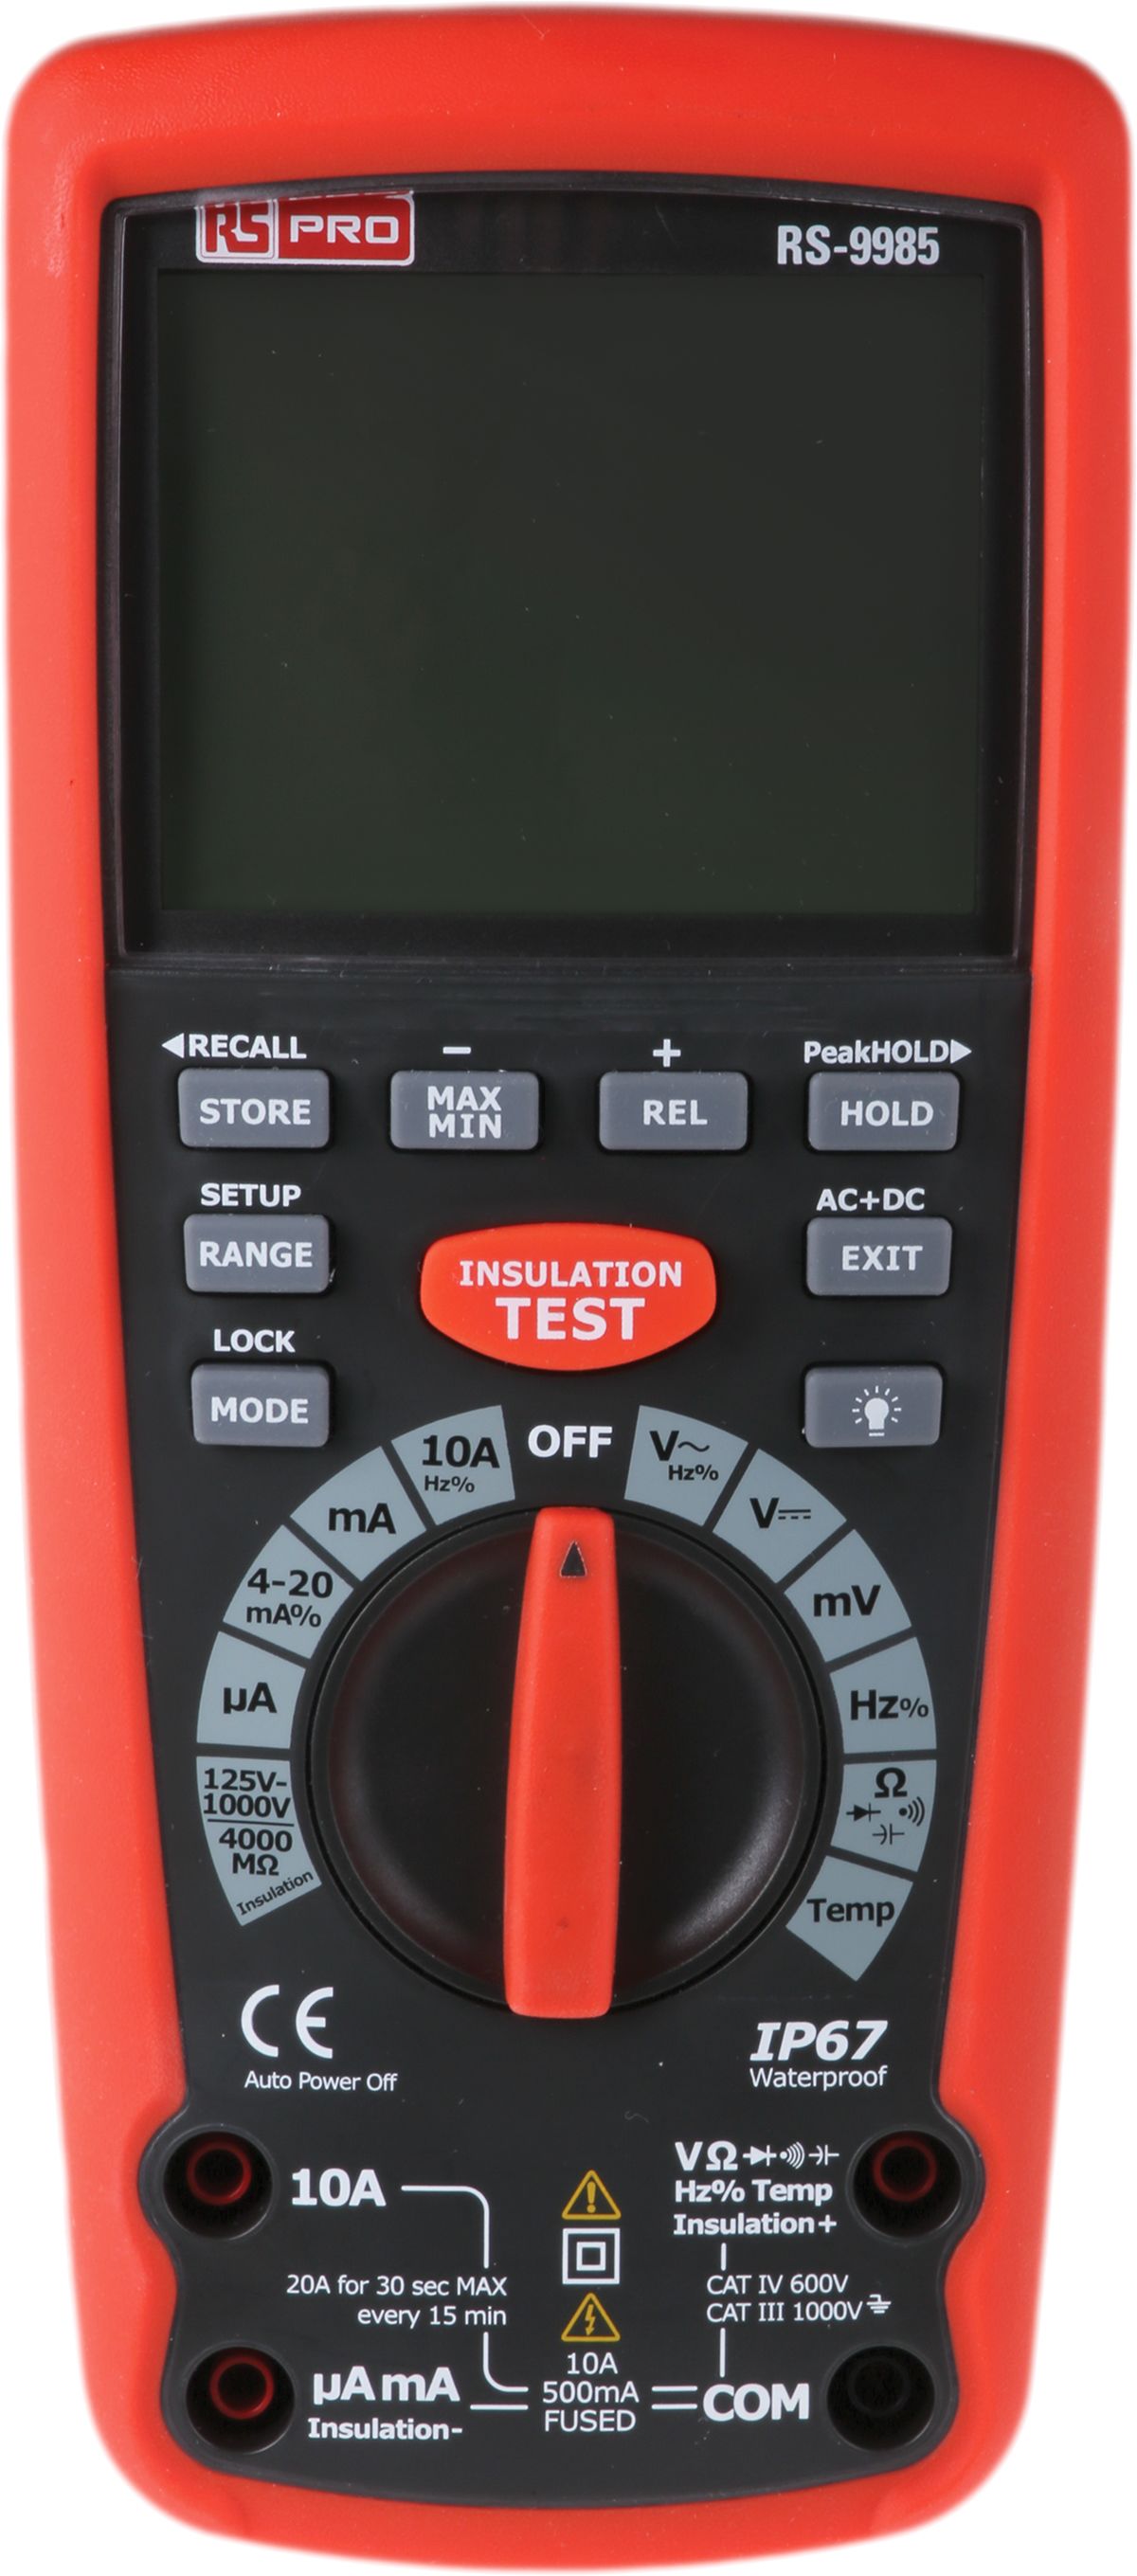 RS PRO RS-9985, Insulation Tester, 1000V, 4GΩ, CAT III 1000V